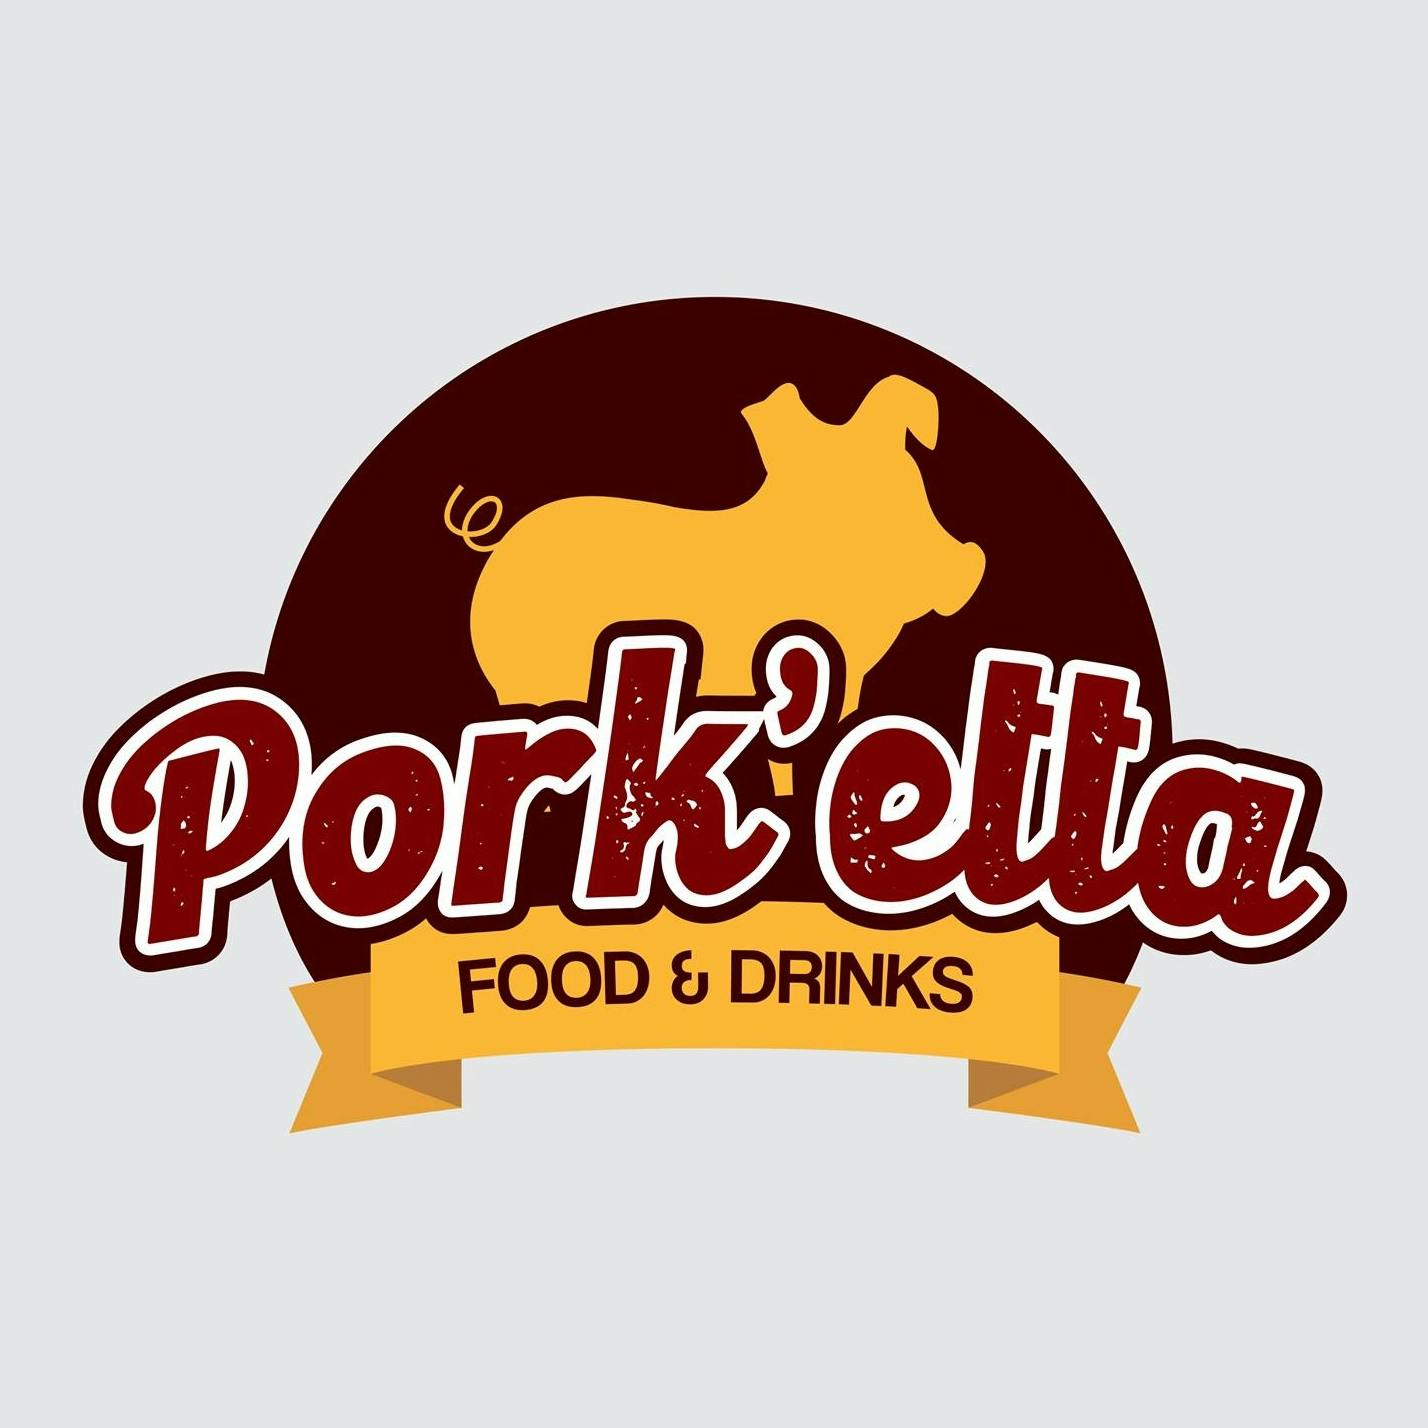 Pork'etta Food & Drinks